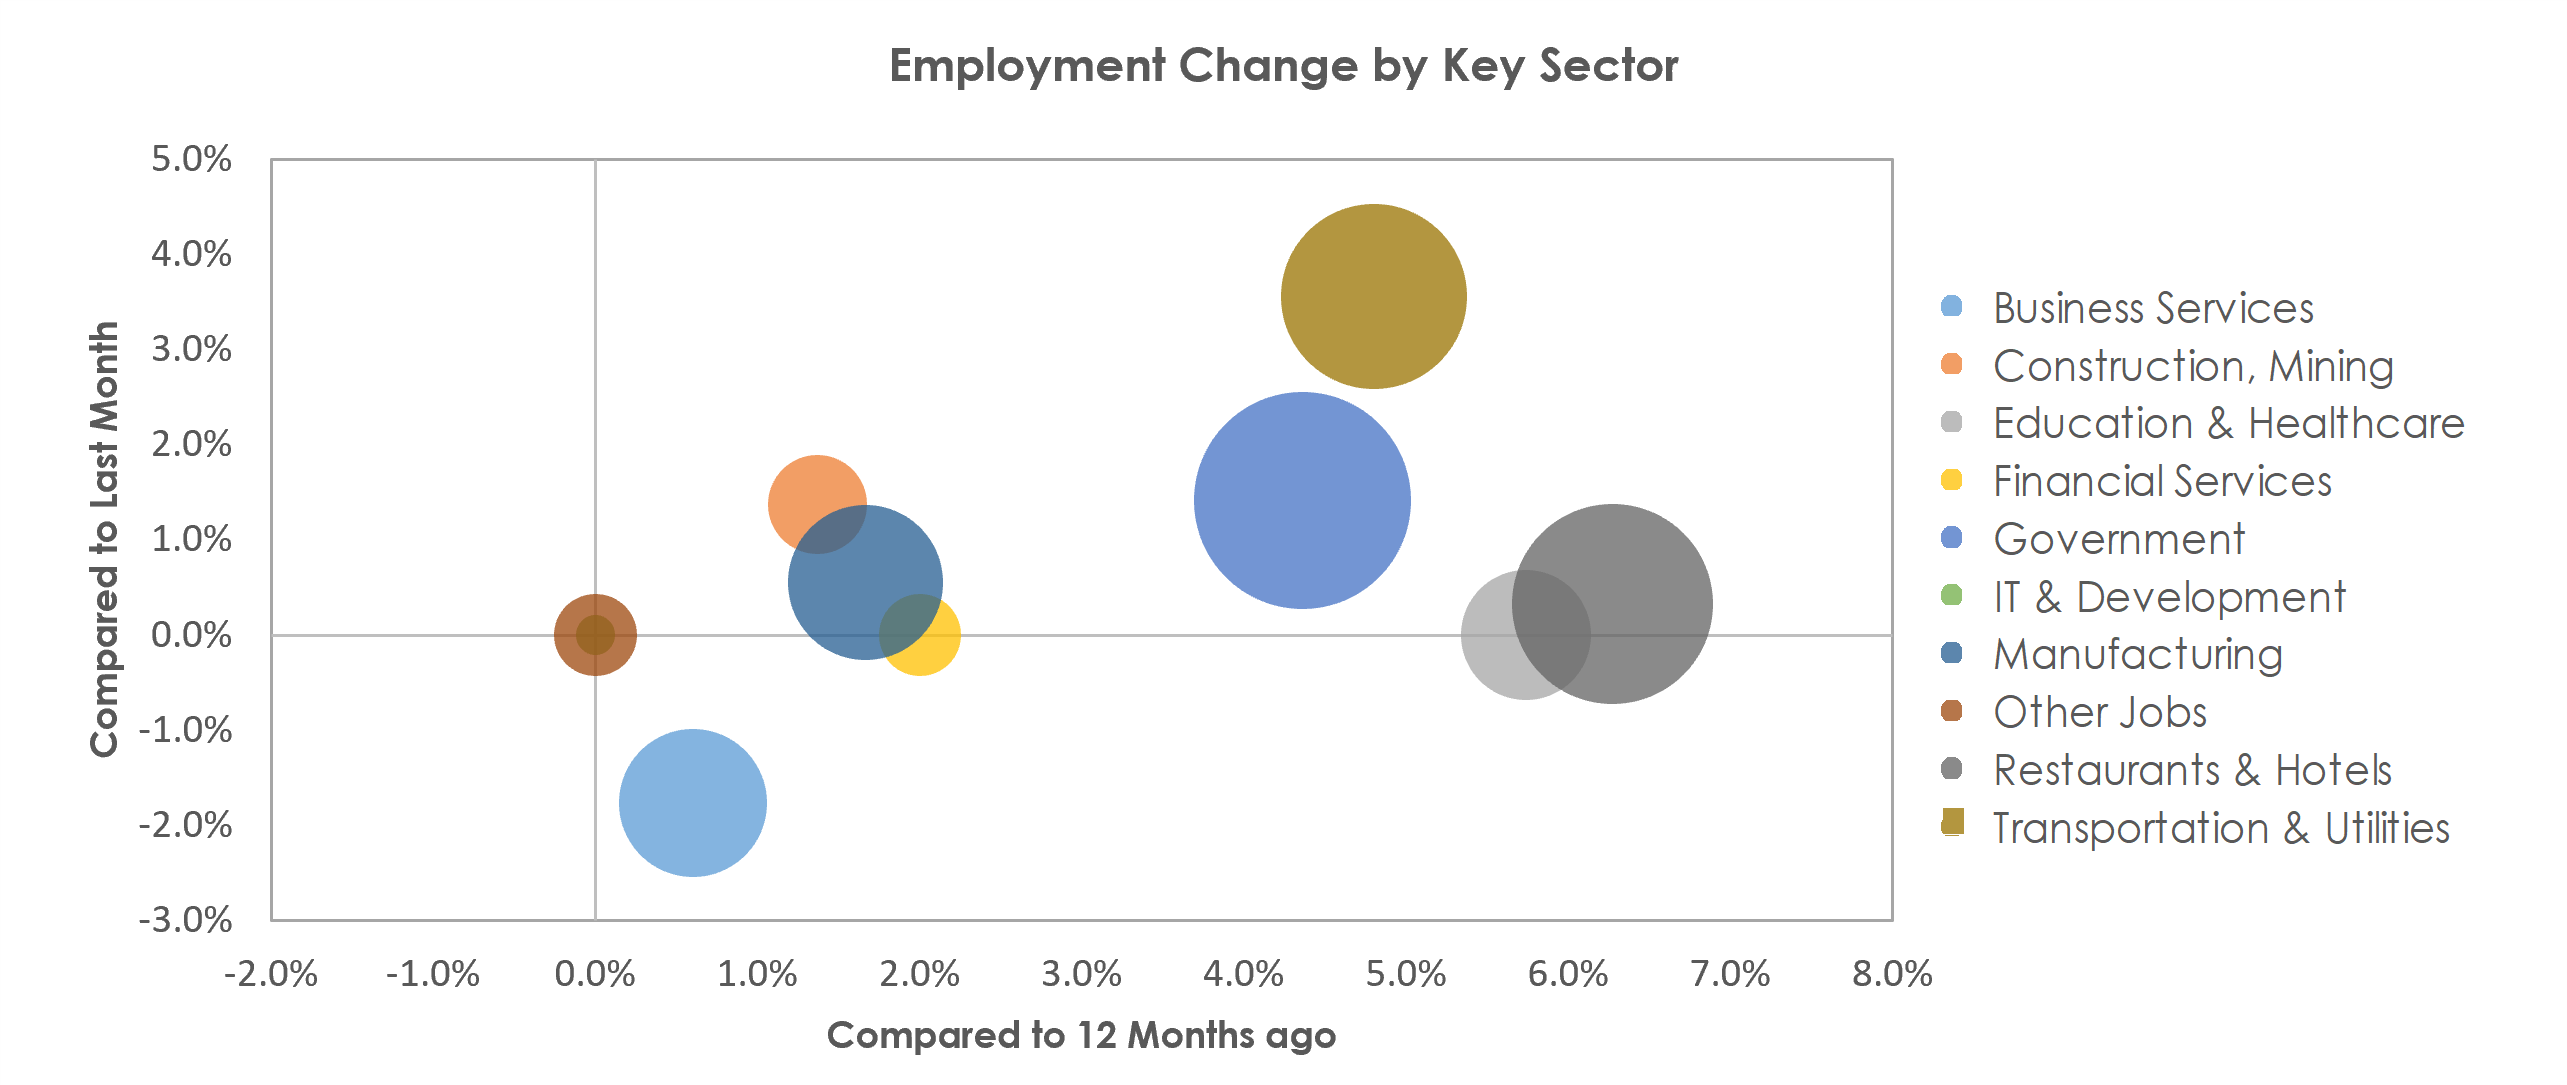 Gulfport-Biloxi-Pascagoula, MS Unemployment by Industry November 2021